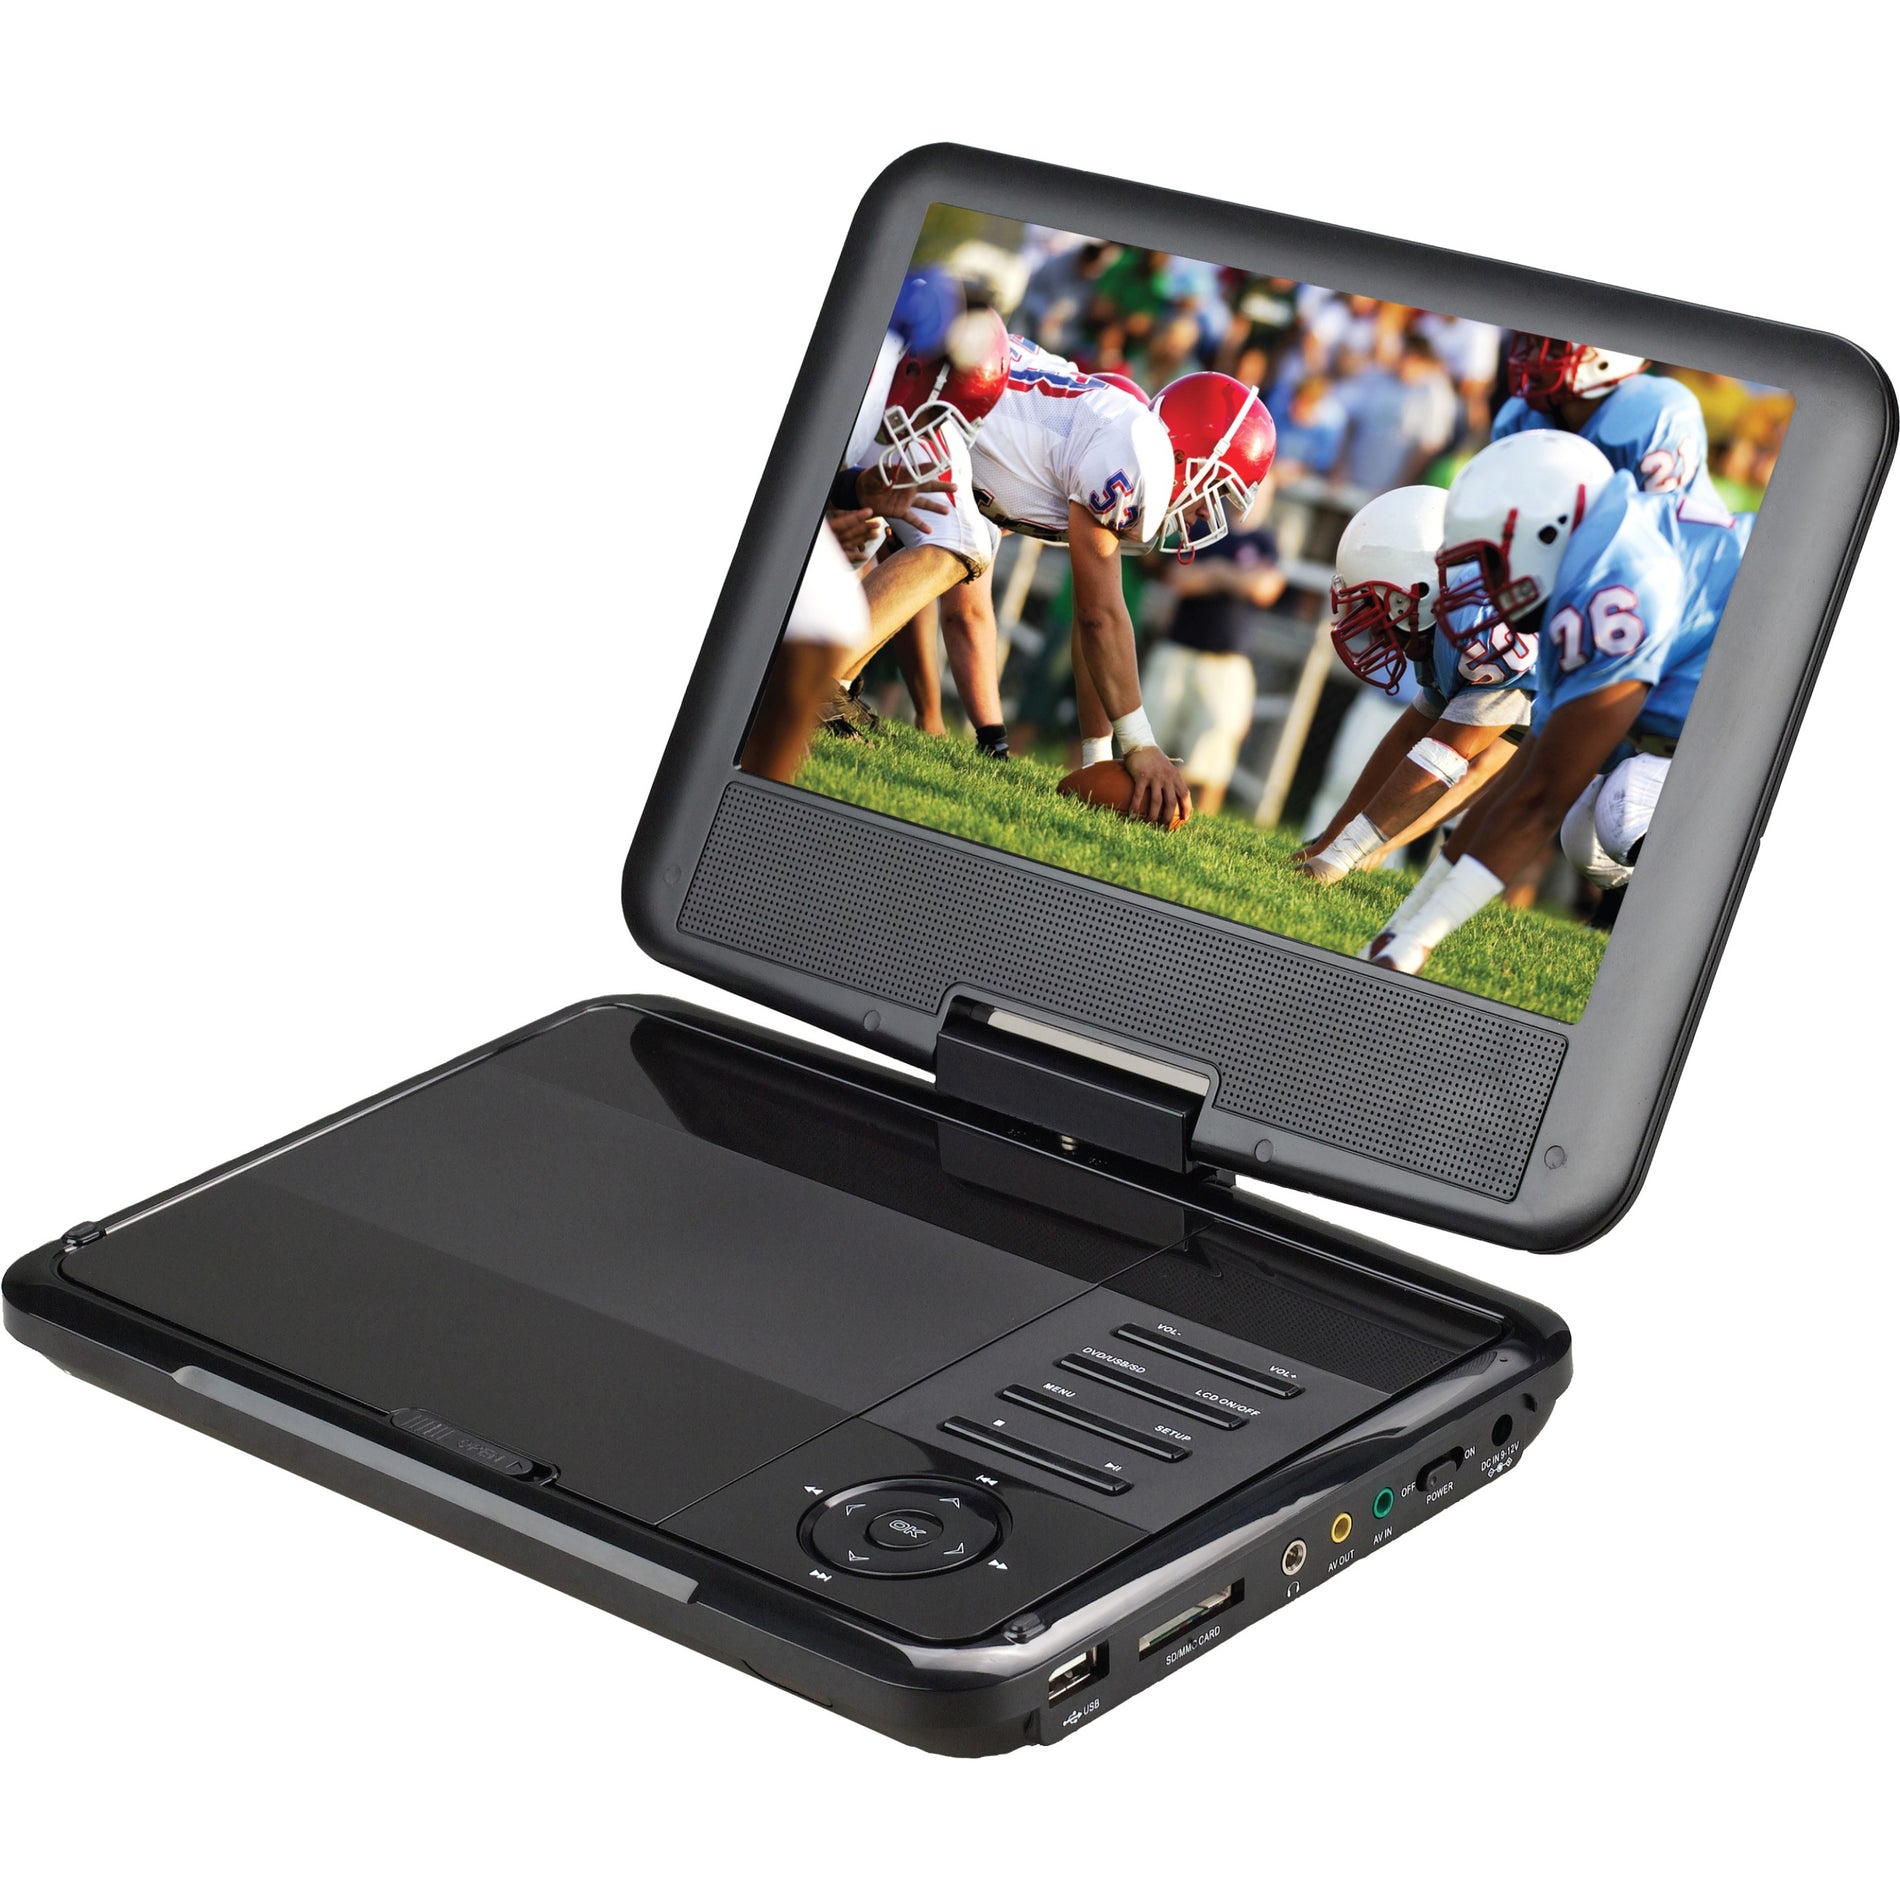 Supersonic SC-179DVD Portable DVD Player 9" Display, Black